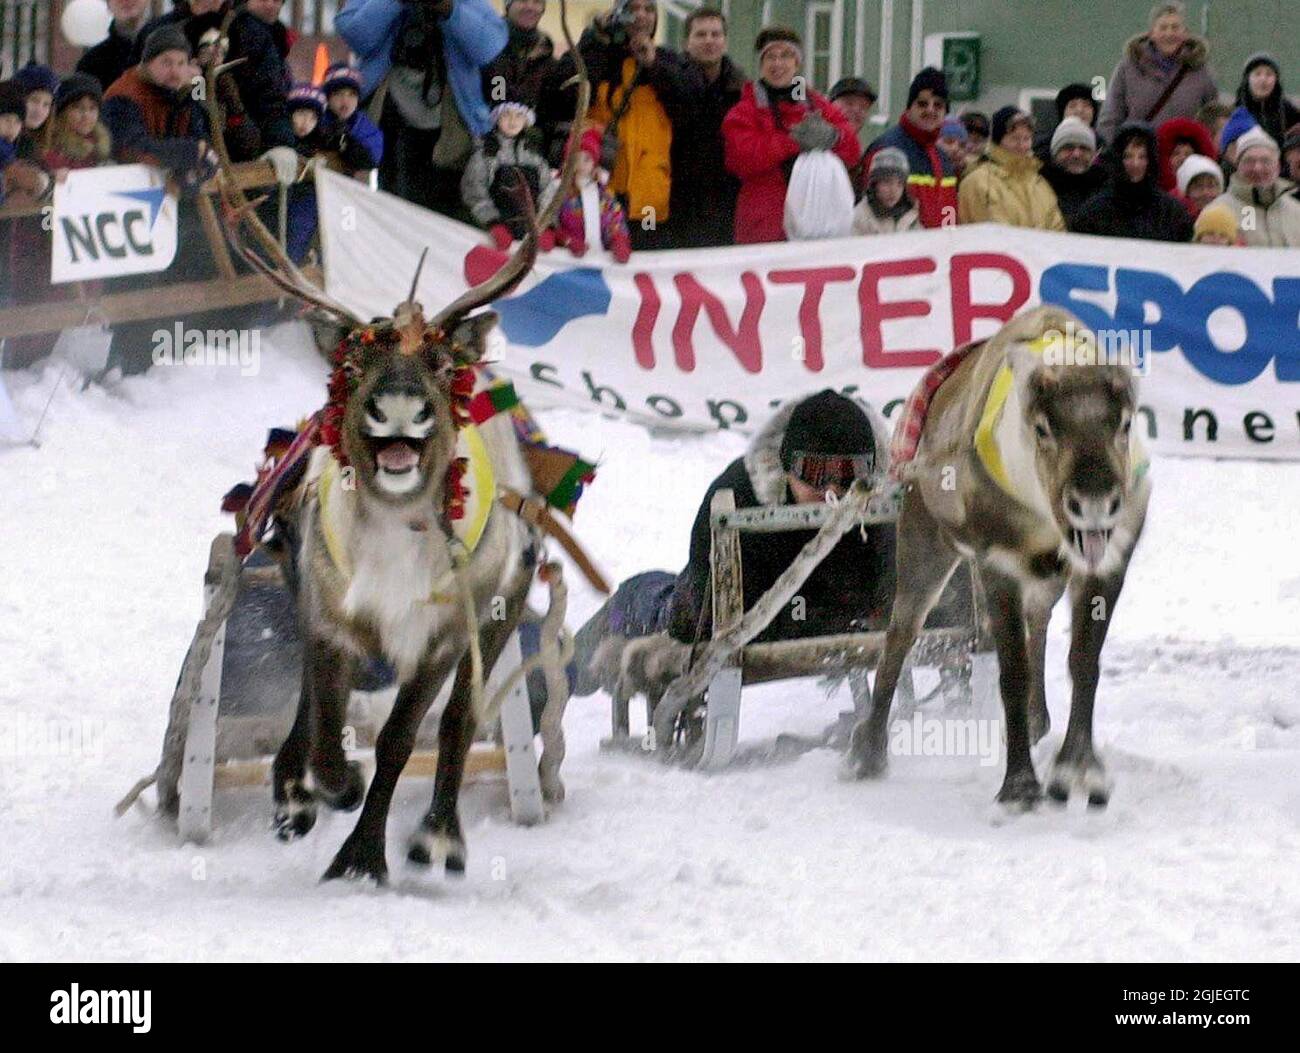 Reindeer race at the snow festival in Kiruna Sweden. Stock Photo